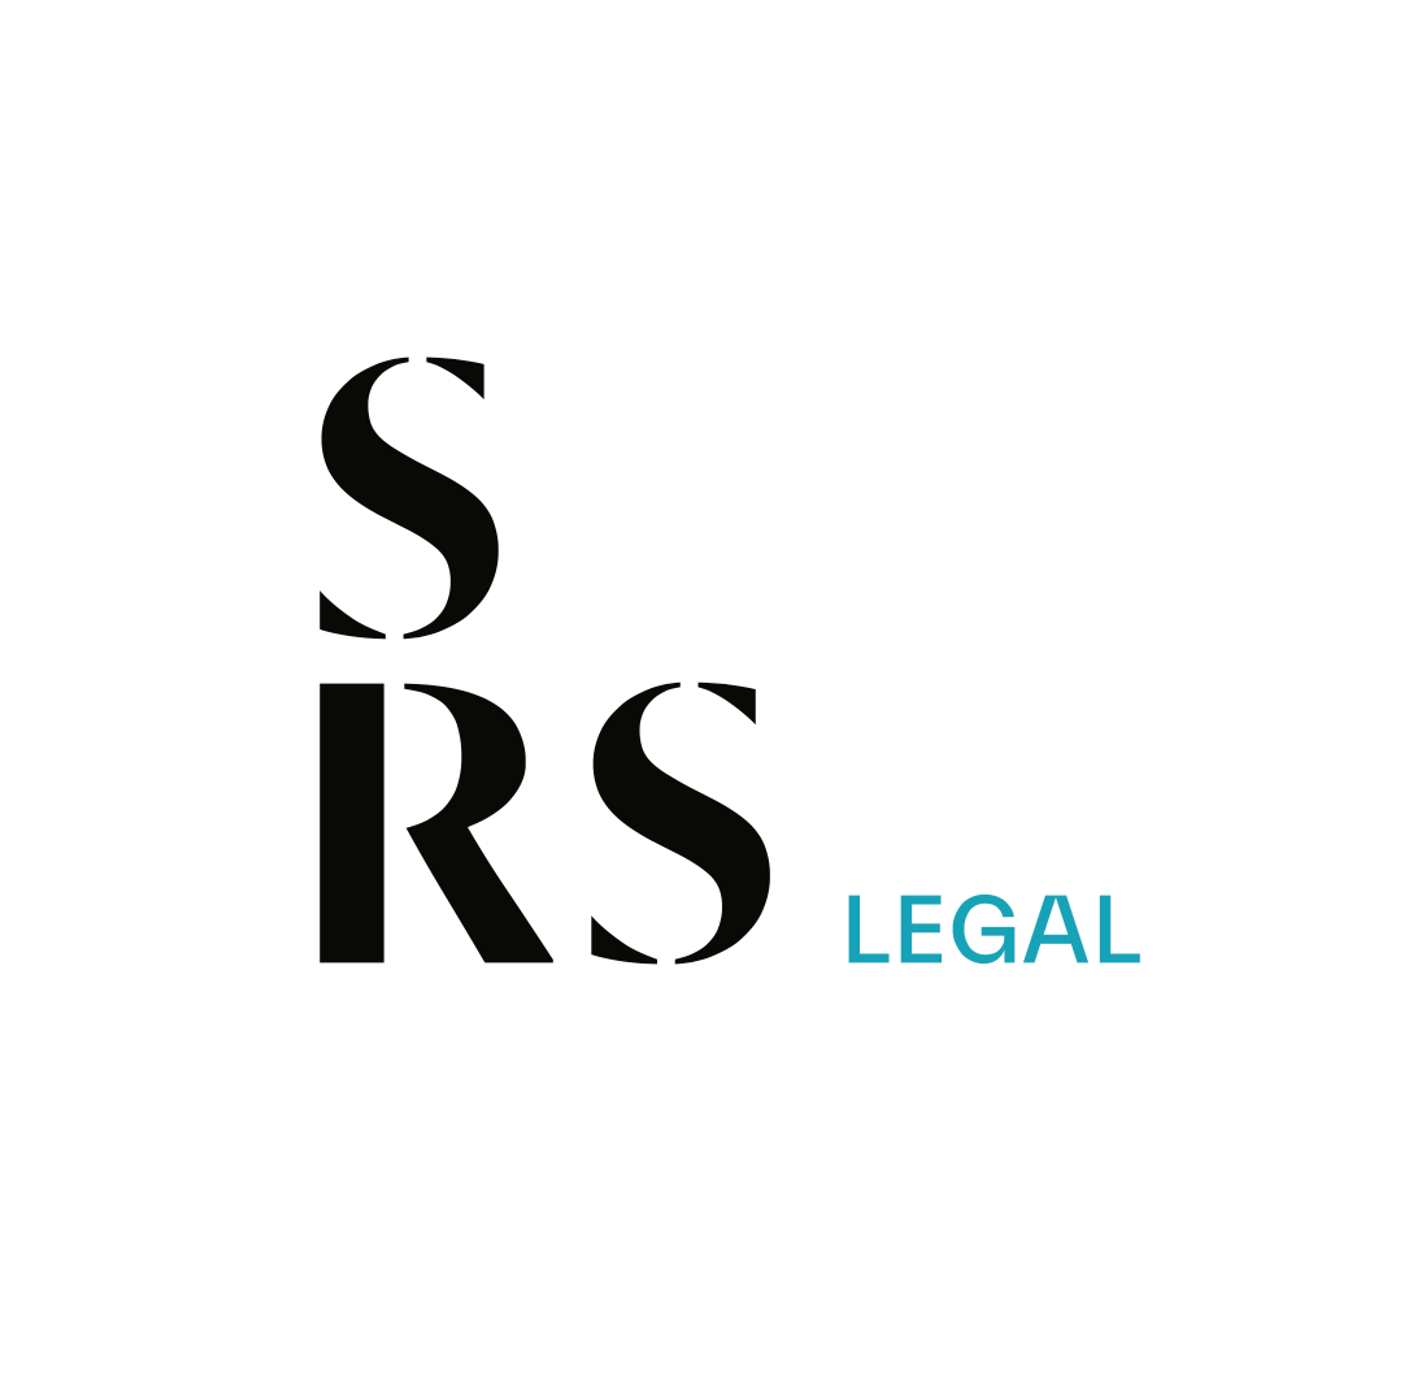 SRS Legal